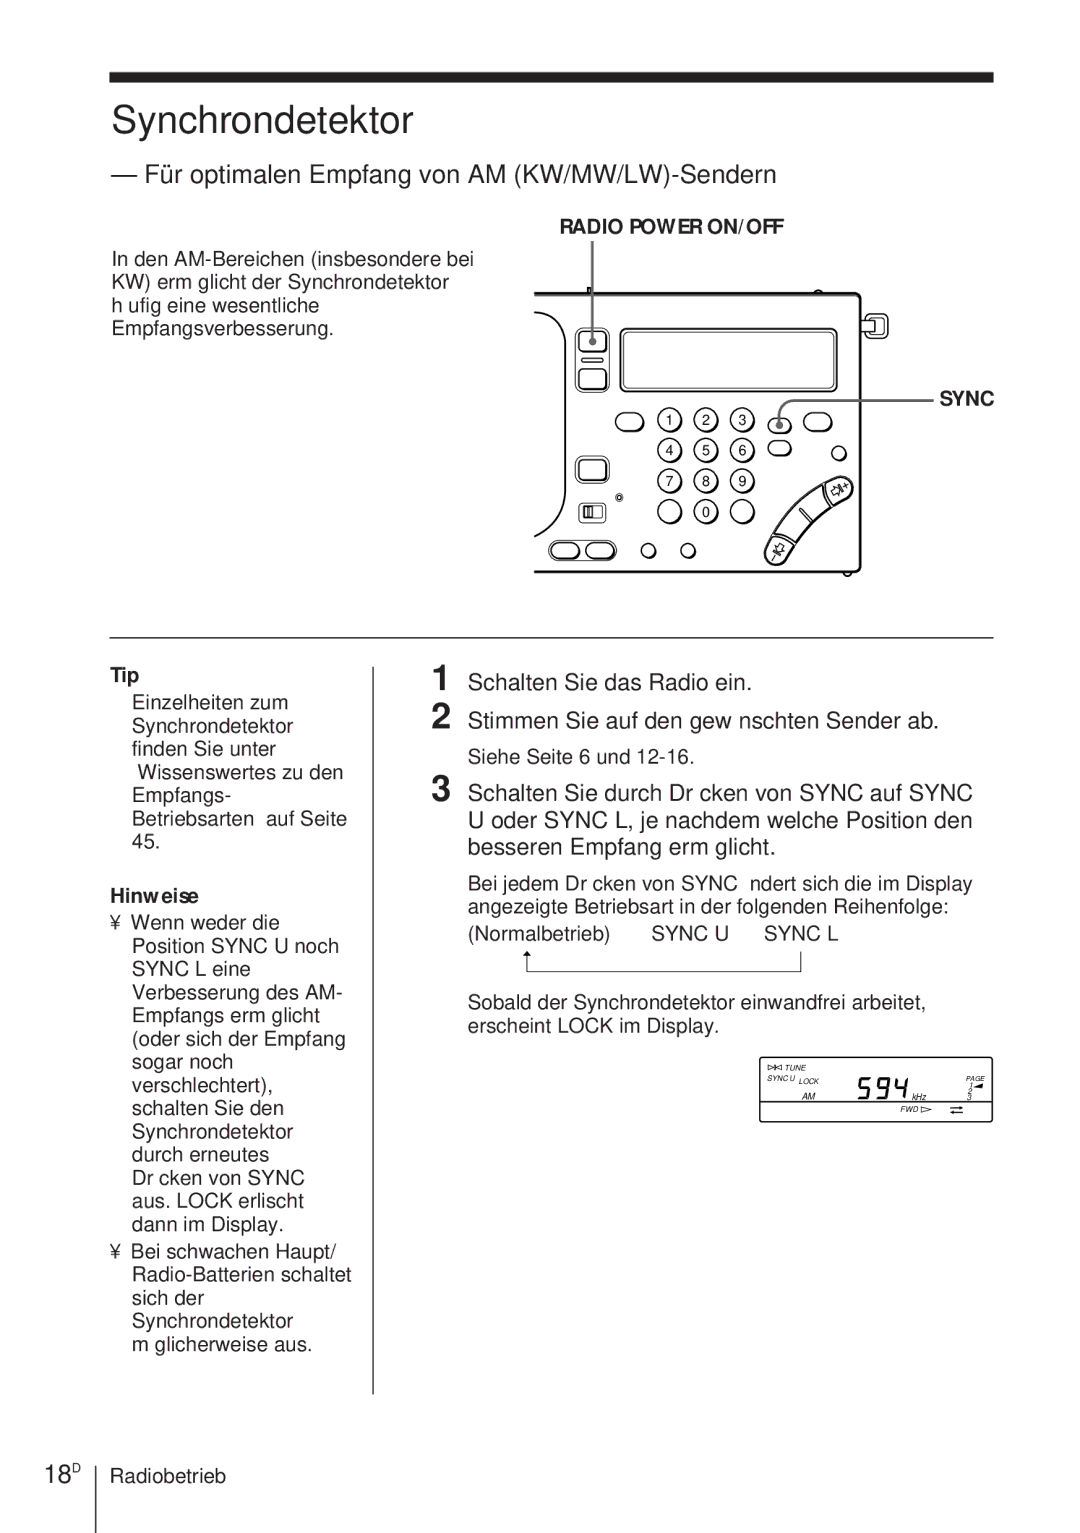 Sony ICF-SW1000TS operating instructions Synchrondetektor, Für optimalen Empfang von AM KW/MW/LW-Sendern, 18D 